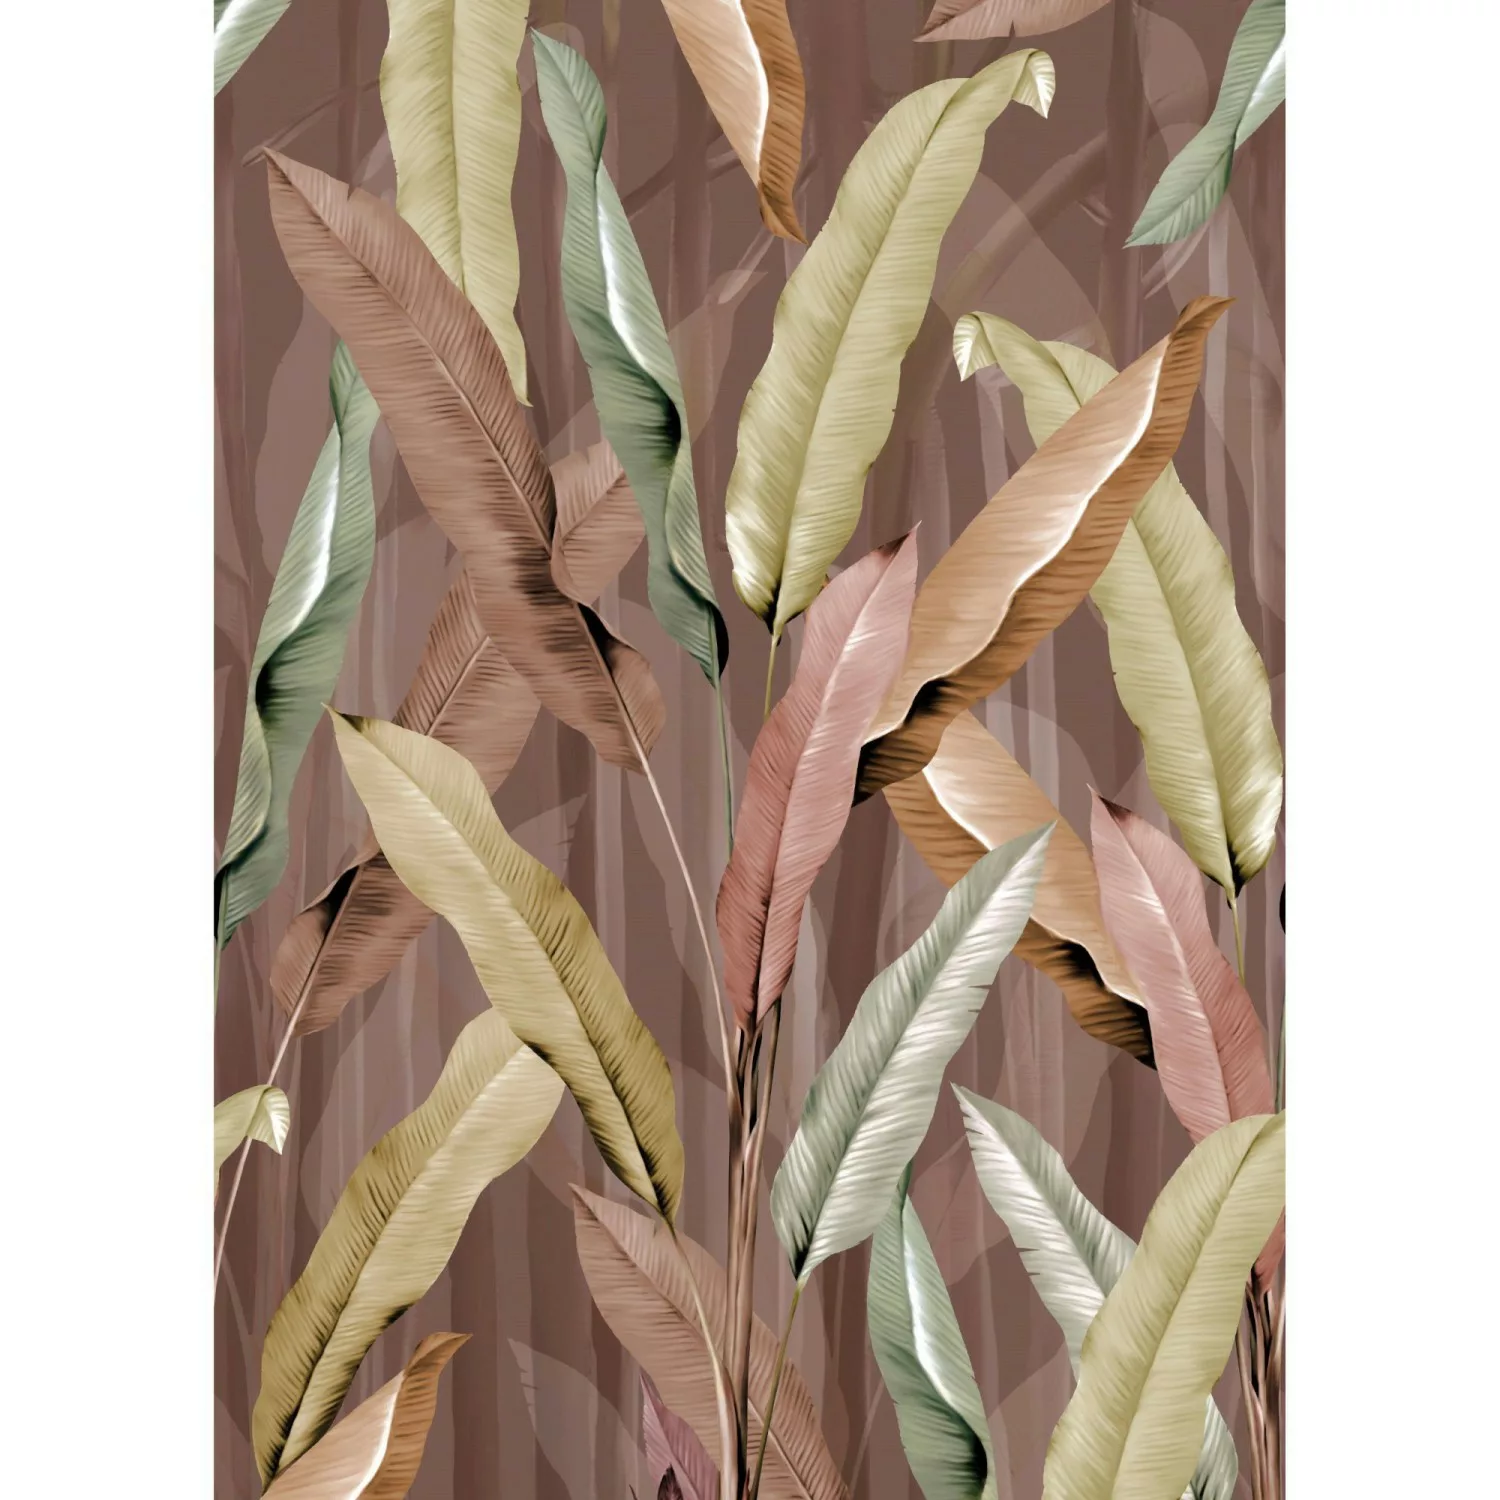 Art for the Home Fototapete Leaves pink 280 x 200 cm günstig online kaufen